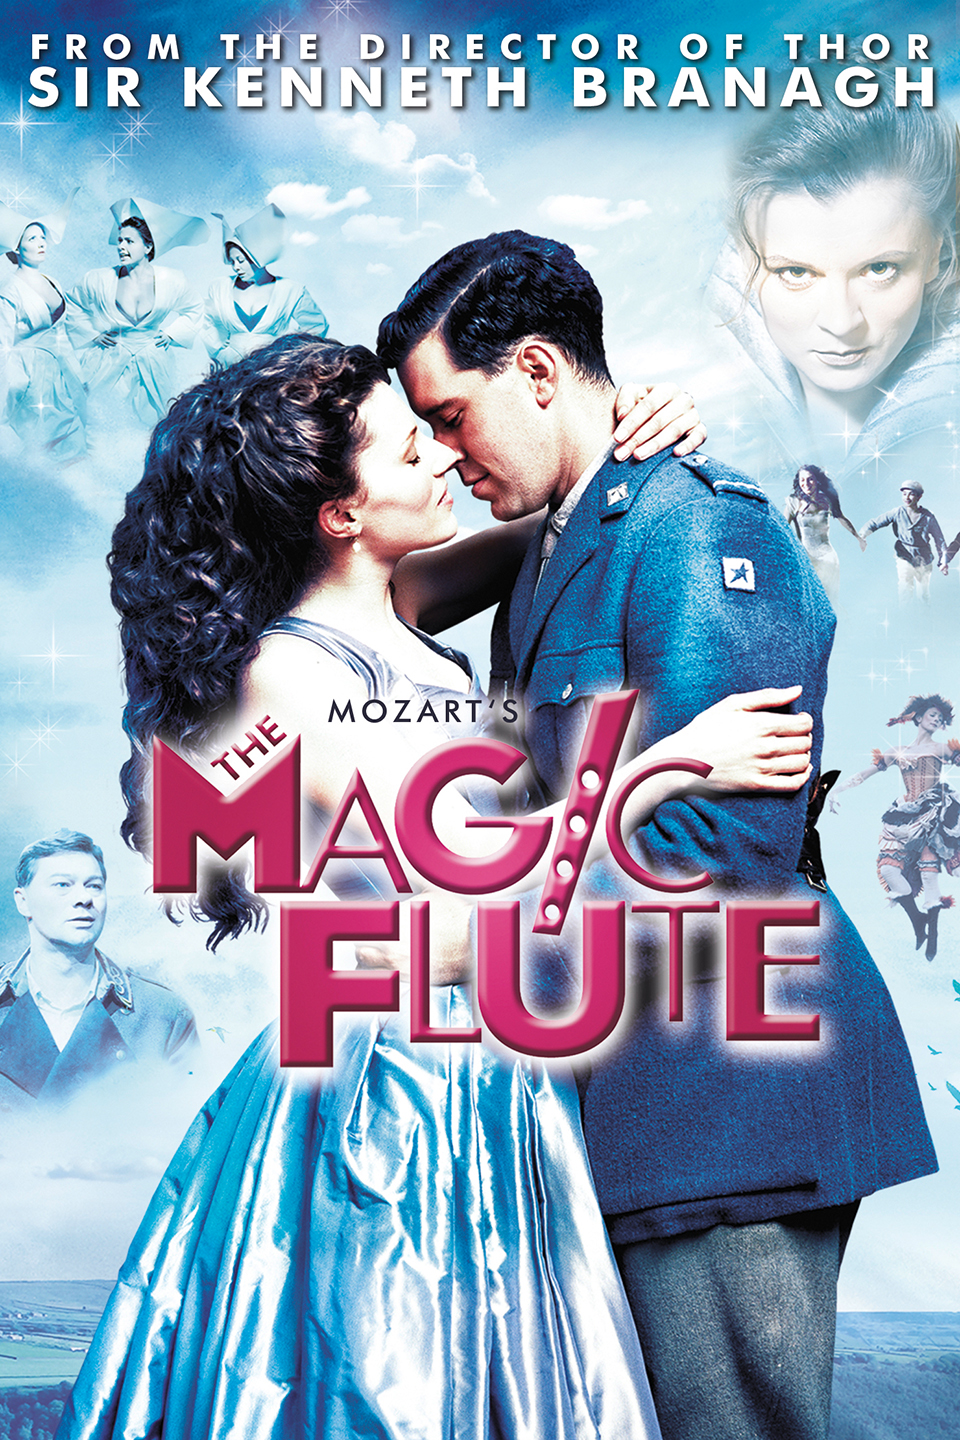 The Magic Flute - Movie Reviews